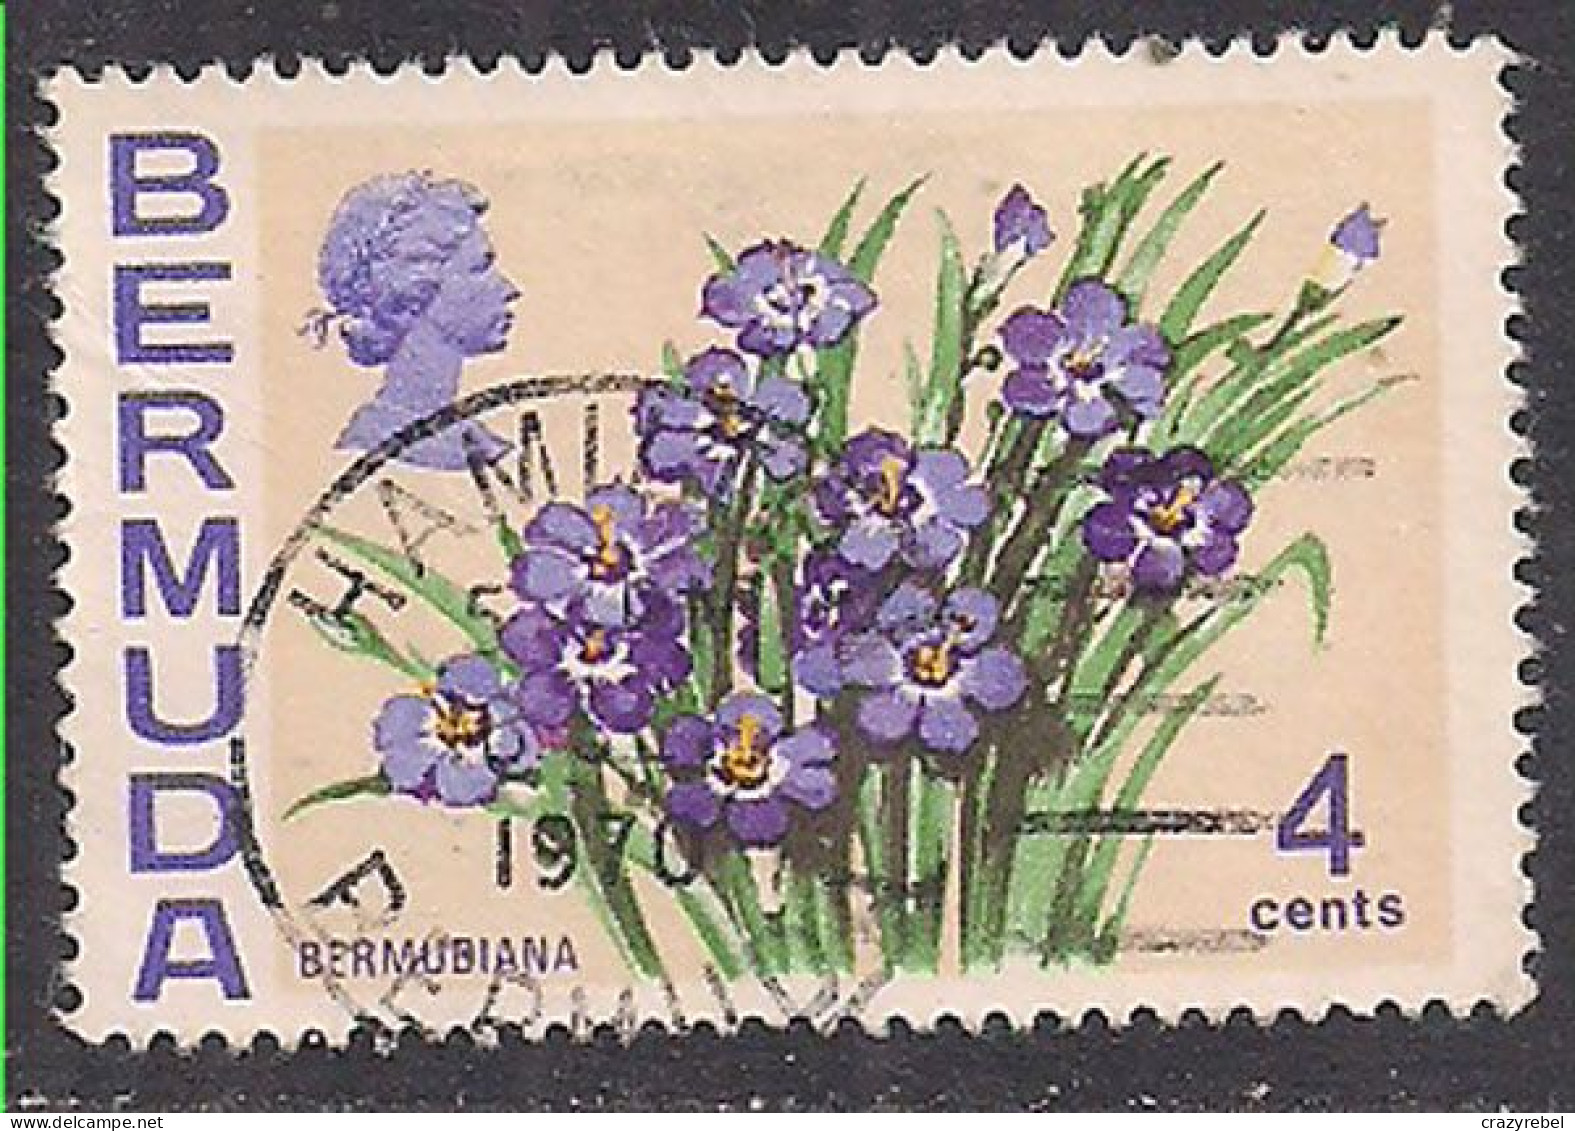 Bermuda 1970 QE2 4cents Flowers SG 252 Used ( C11 ) - Bermuda